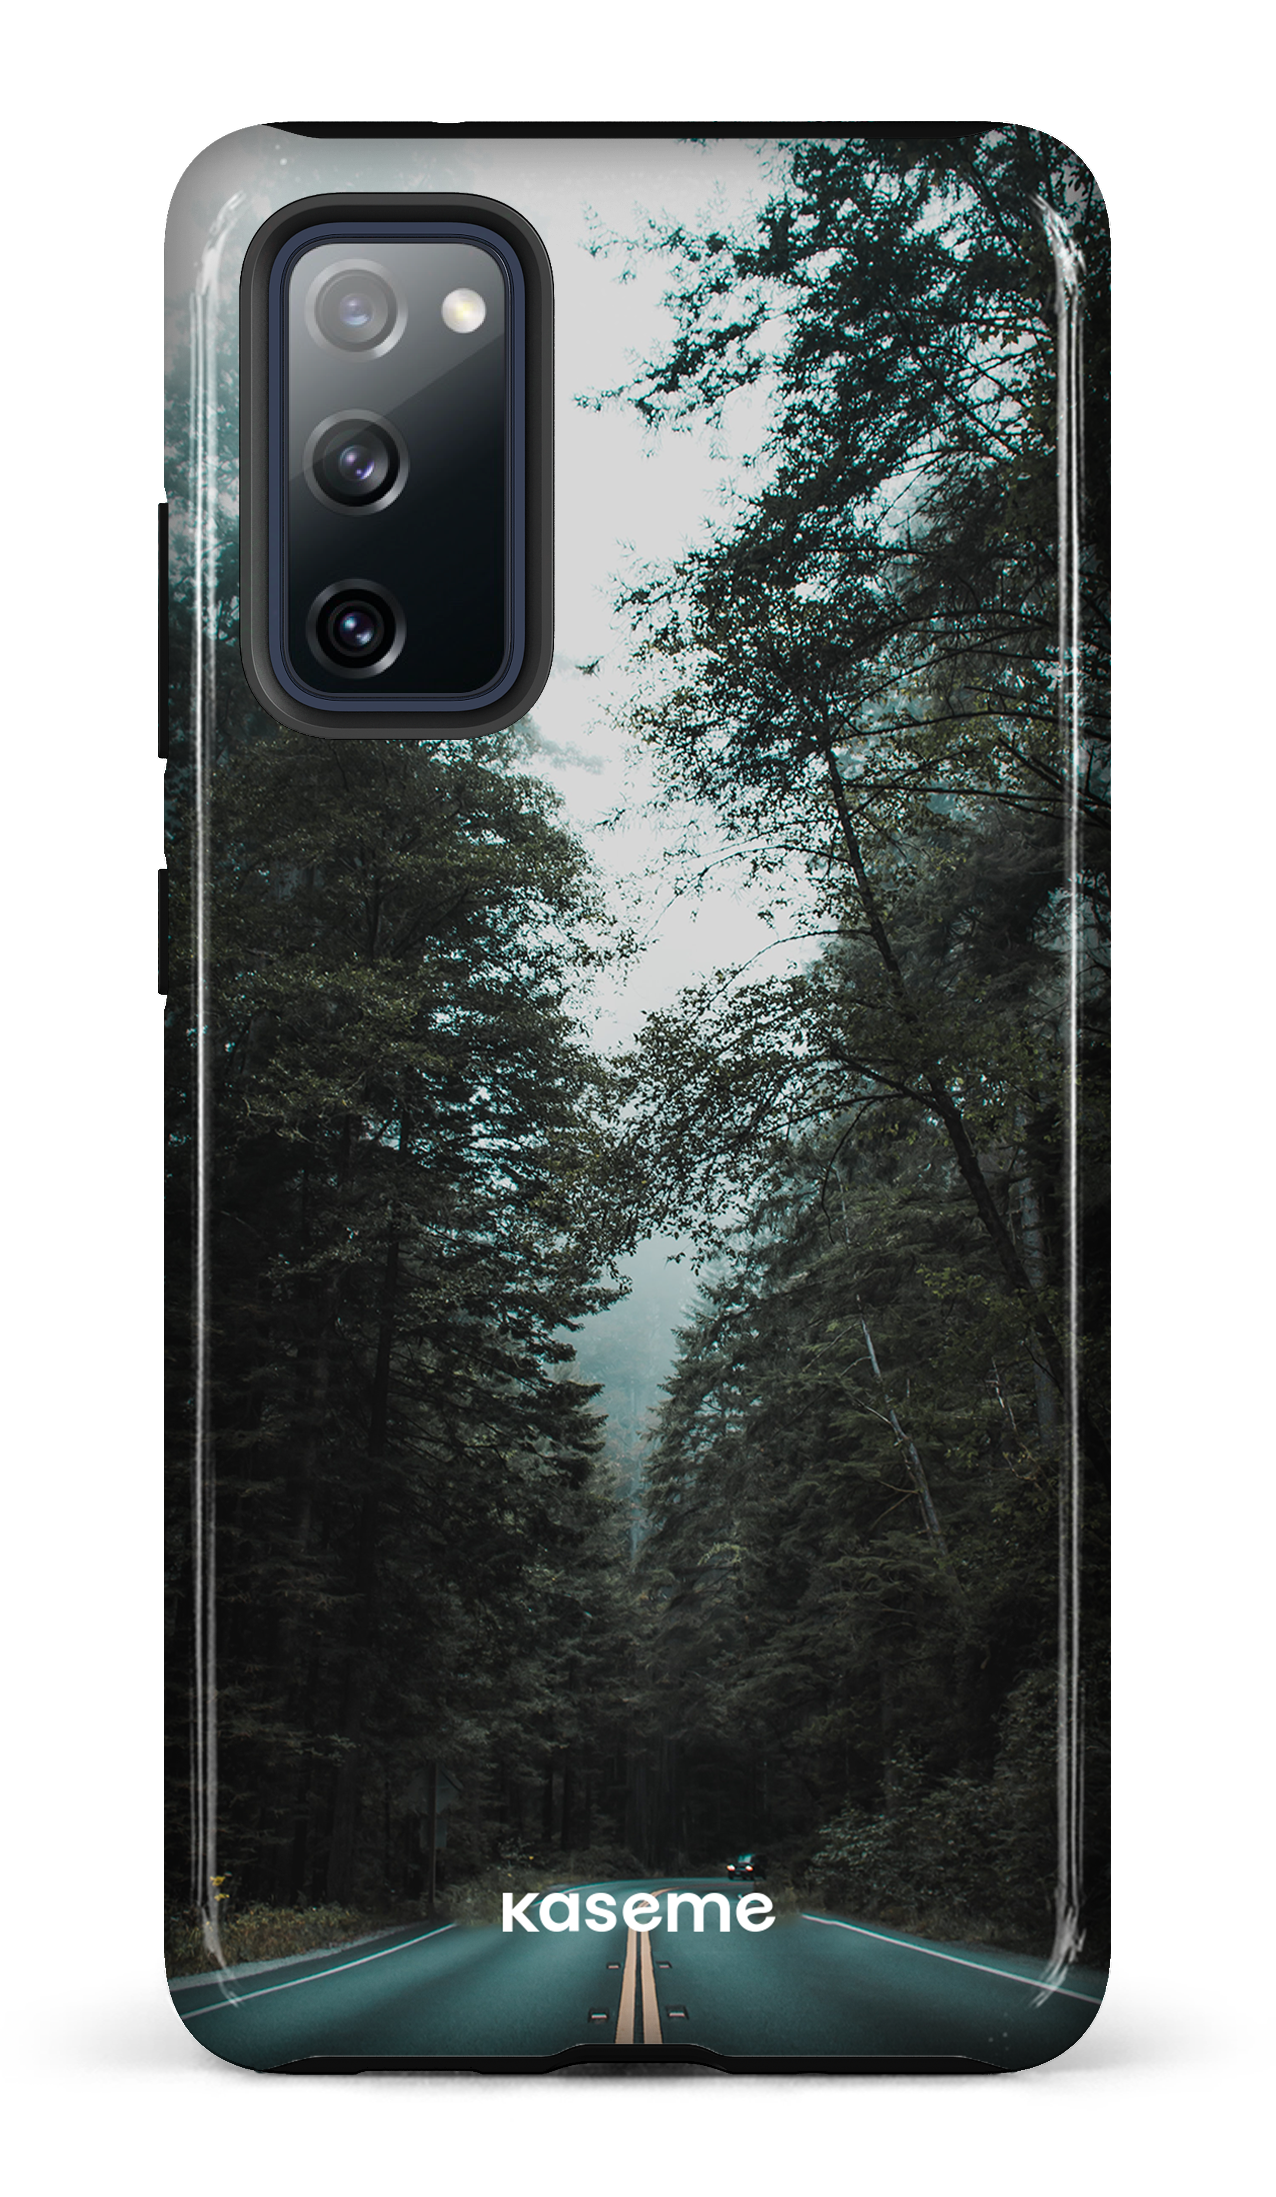 Sequoia - Galaxy S20 FE